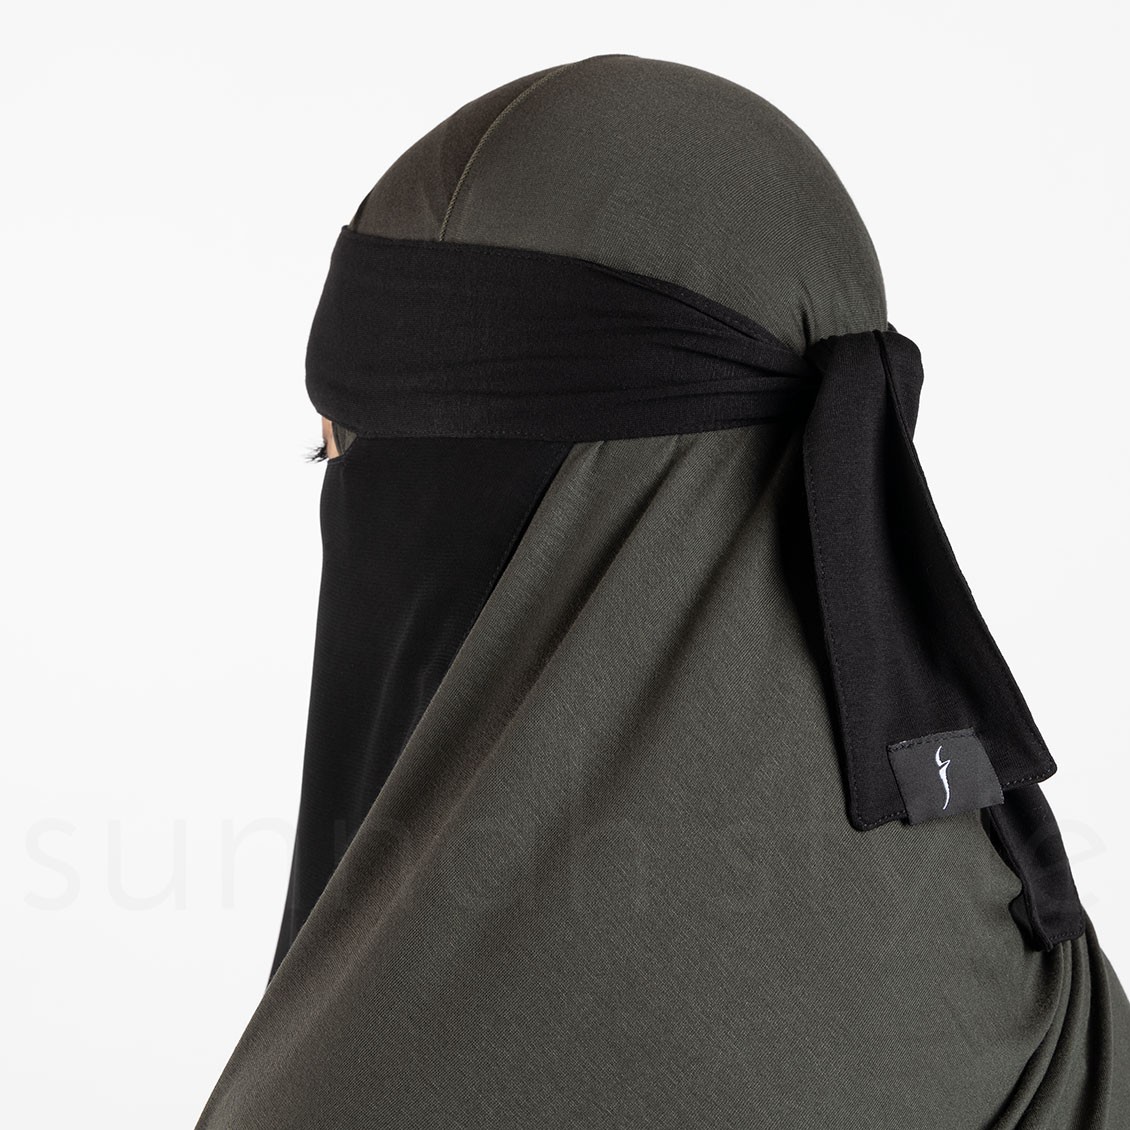 Sunnah Style Narrow No-Pinch One Layer Soft Fit Niqab Black